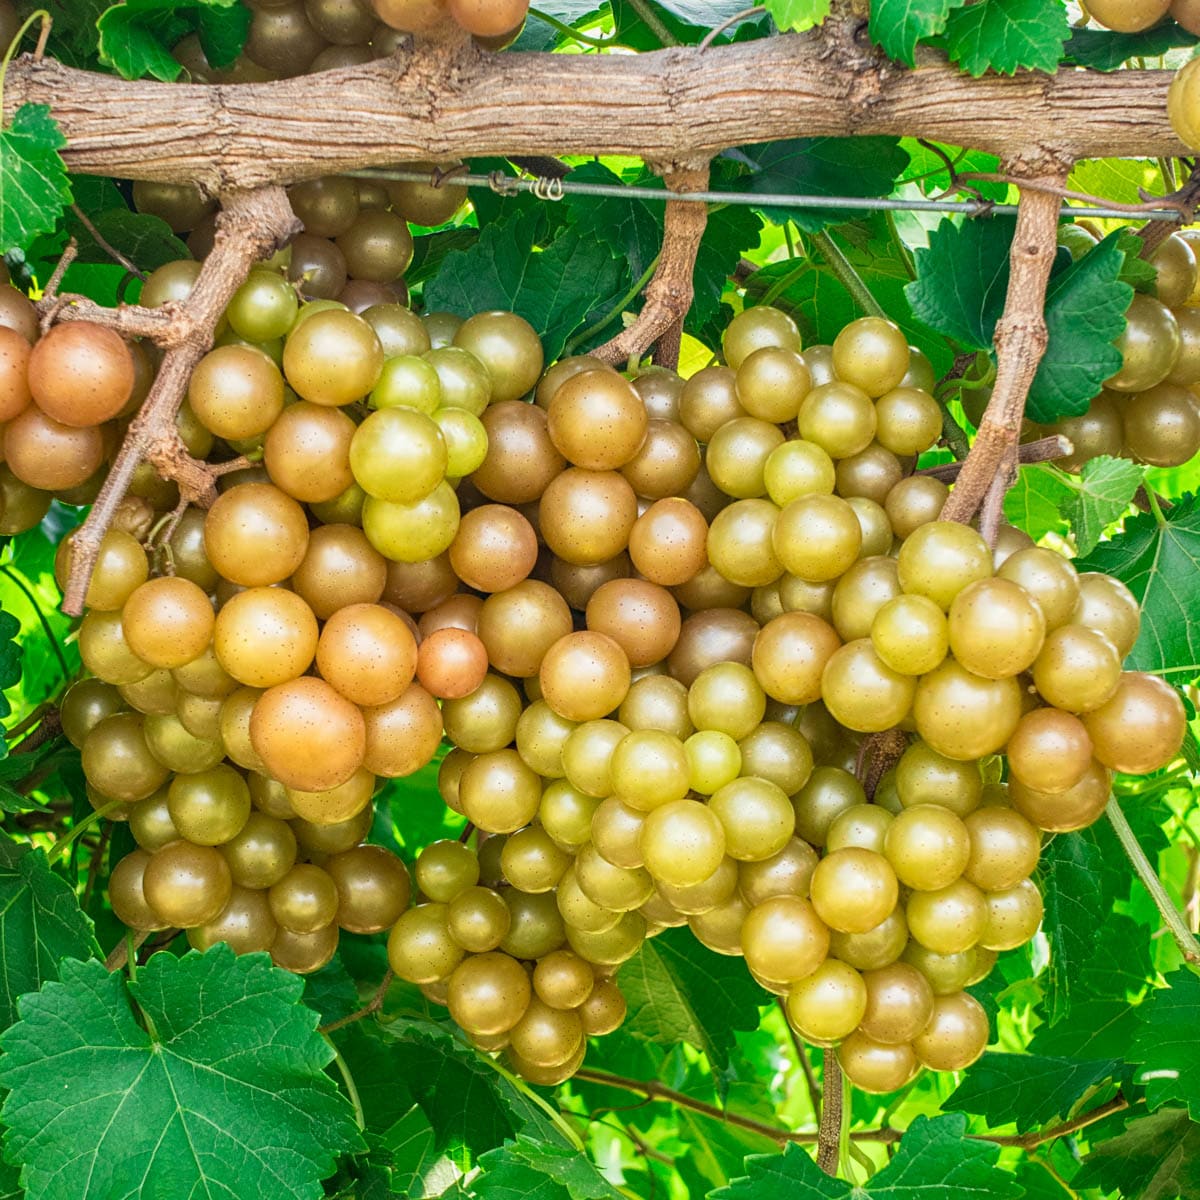 Exrta Large Seedless Green Grapes (1.5 lb-2 lb)